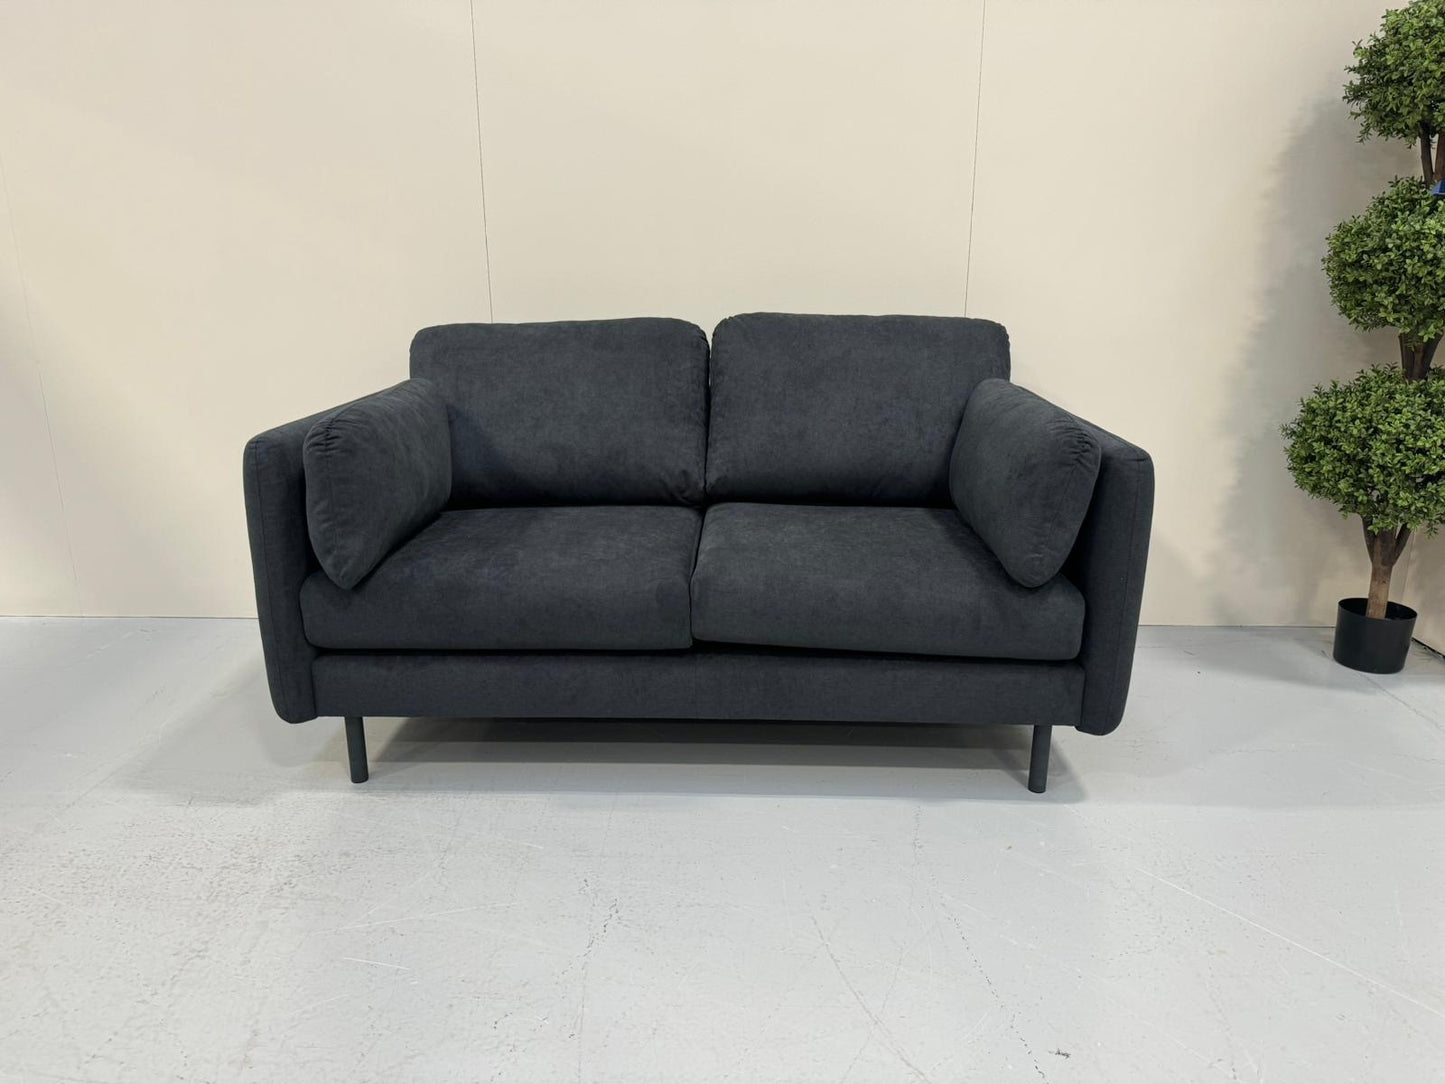 Sample Sofa SC133